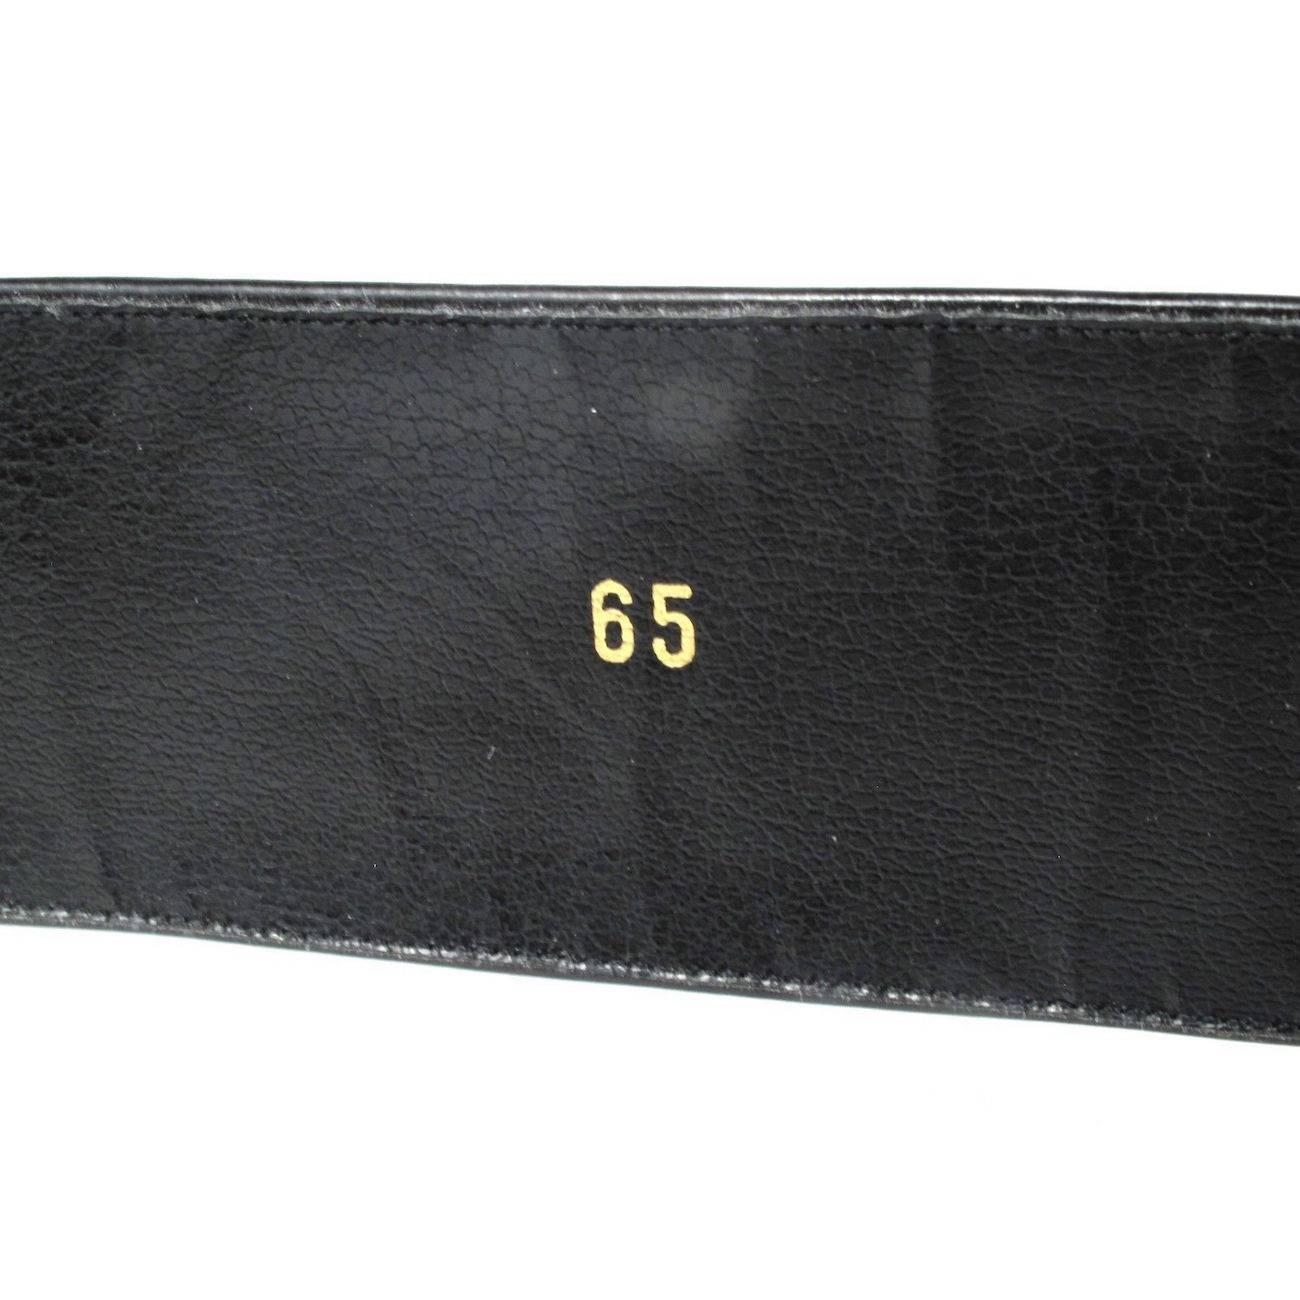 Chanel Belt - Size 65 - Vintage Black Patent Leather CC Logo Gold Buckle Charm For Sale 3